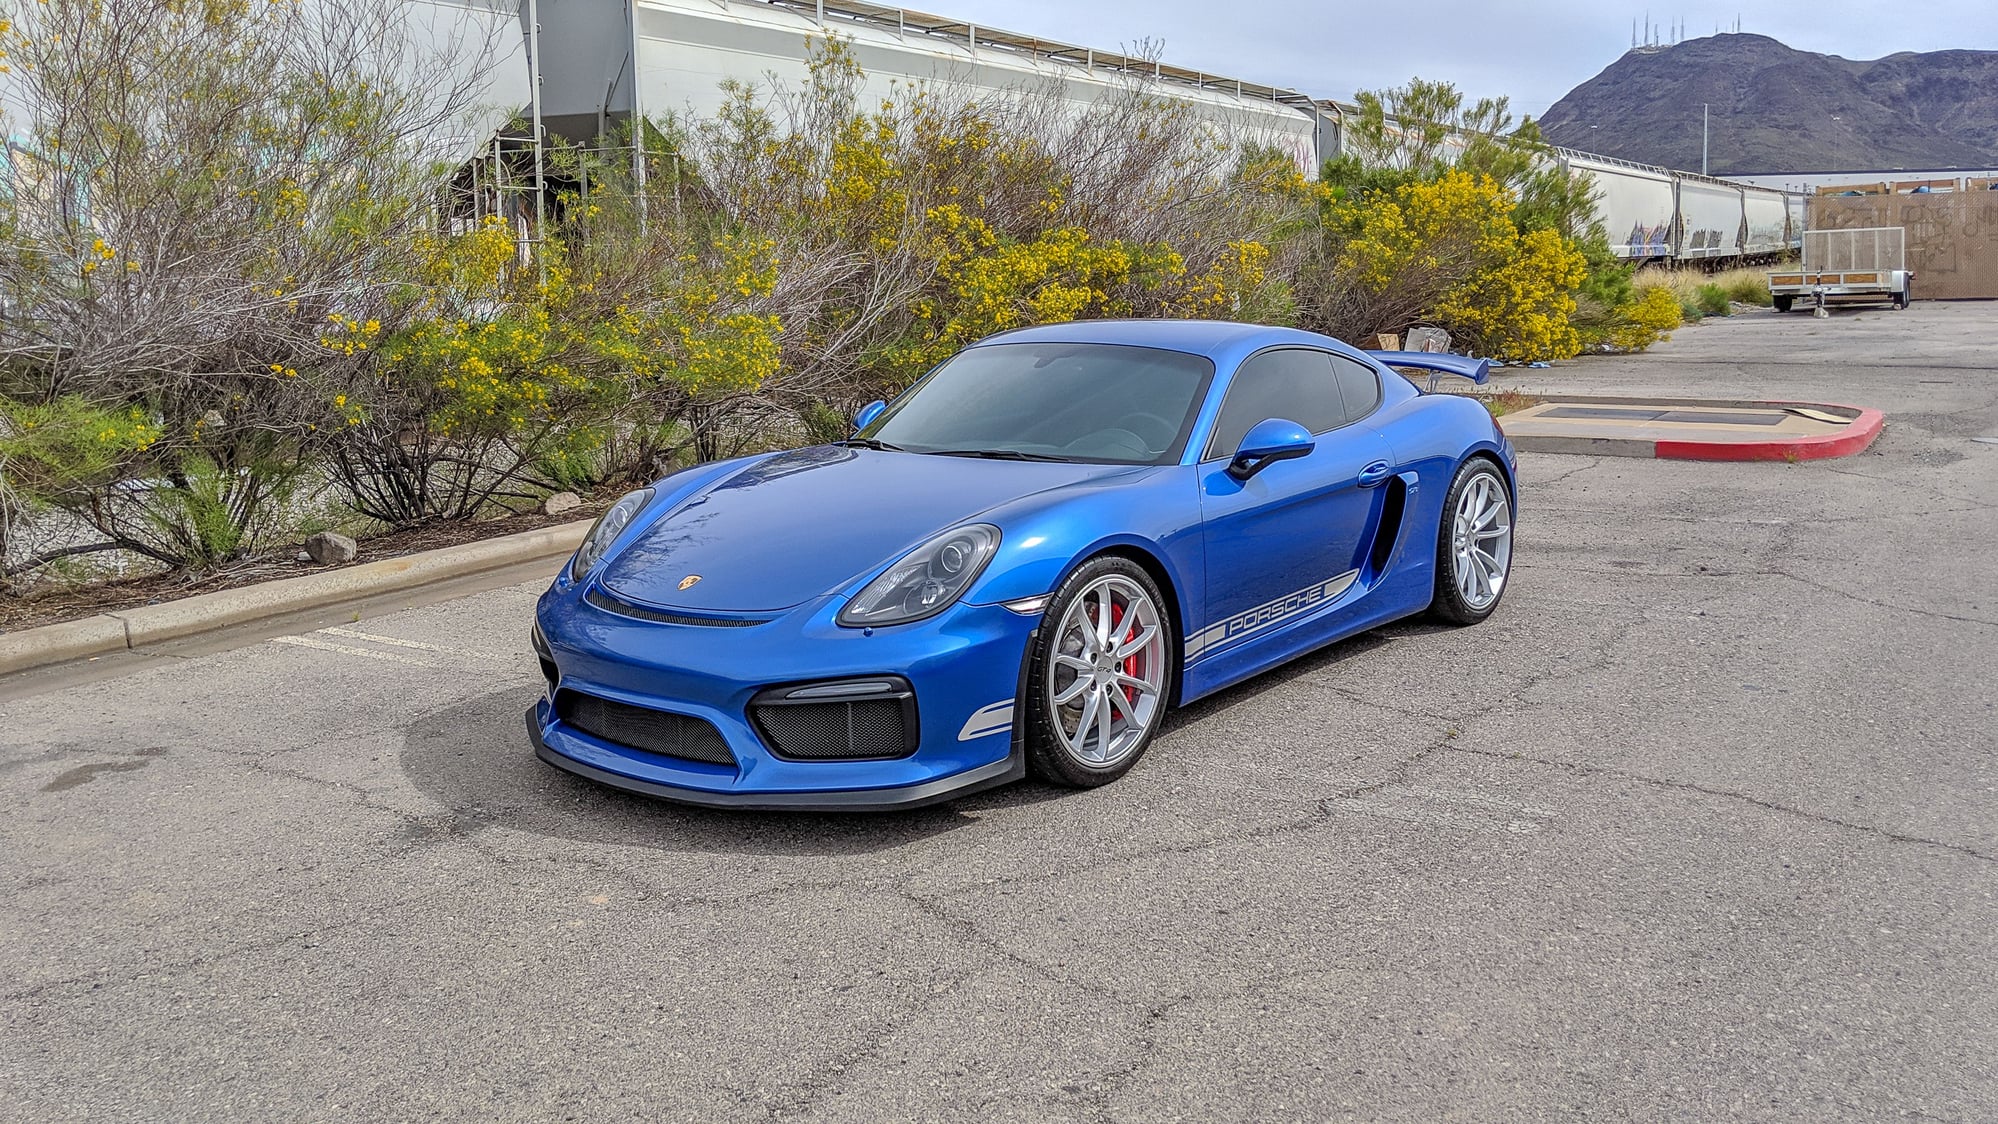 2016 Porsche Cayman GT4 - Sapphire Blue 2016 Porsche GT4 For Sale - Used - VIN WP0AC2A89GK197535 - 23,500 Miles - 2WD - Manual - Coupe - Blue - Las Vegas, NV 89014, United States